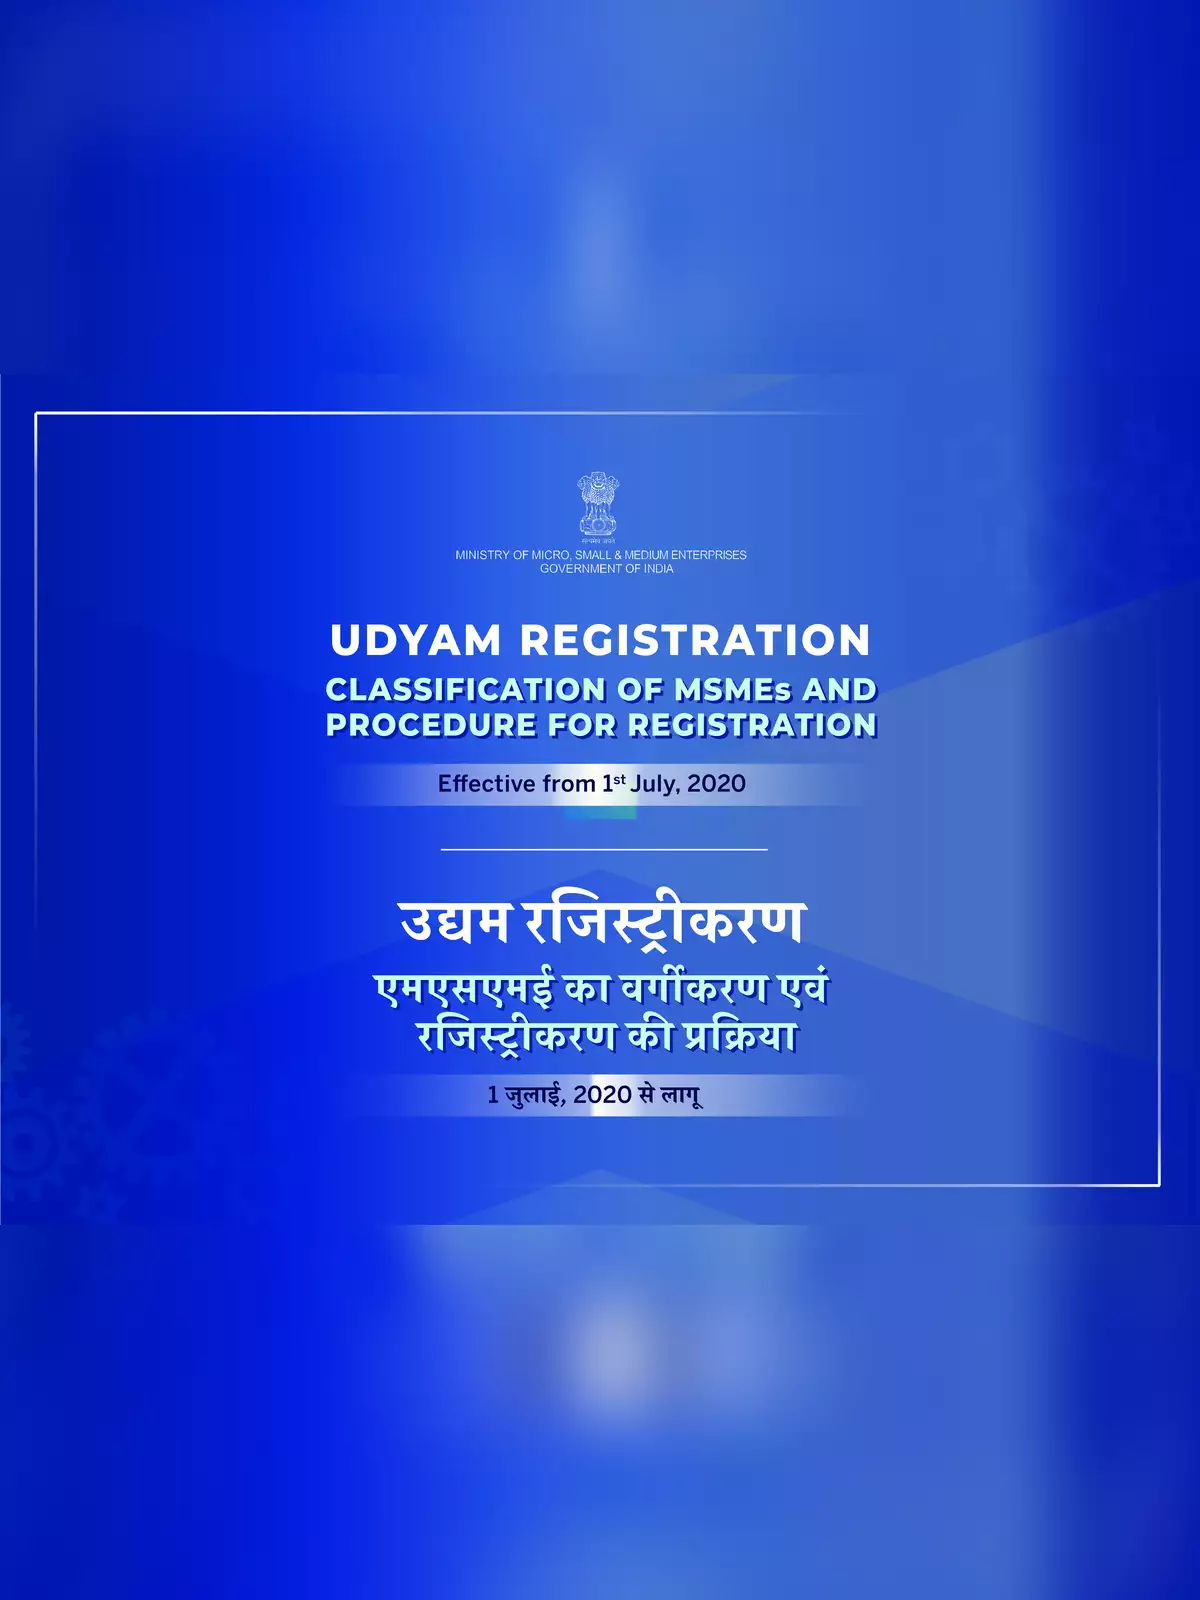 Udyam Registration Process & MSME Classification